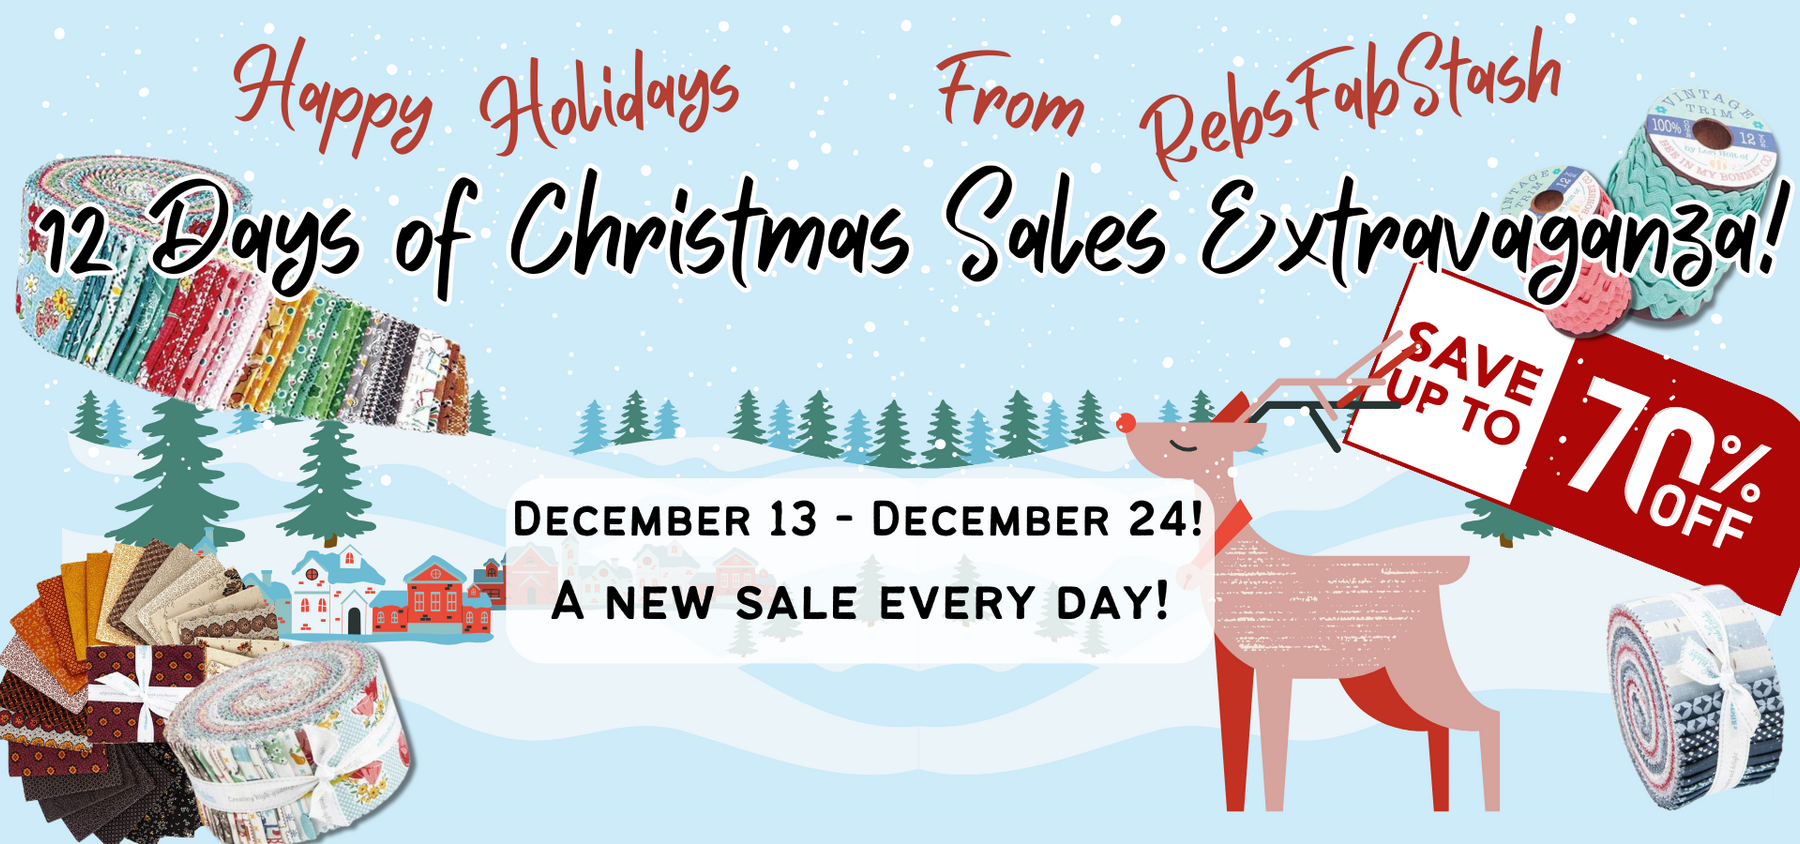 RebsFabStash's 12 Days of Christmas Sales!